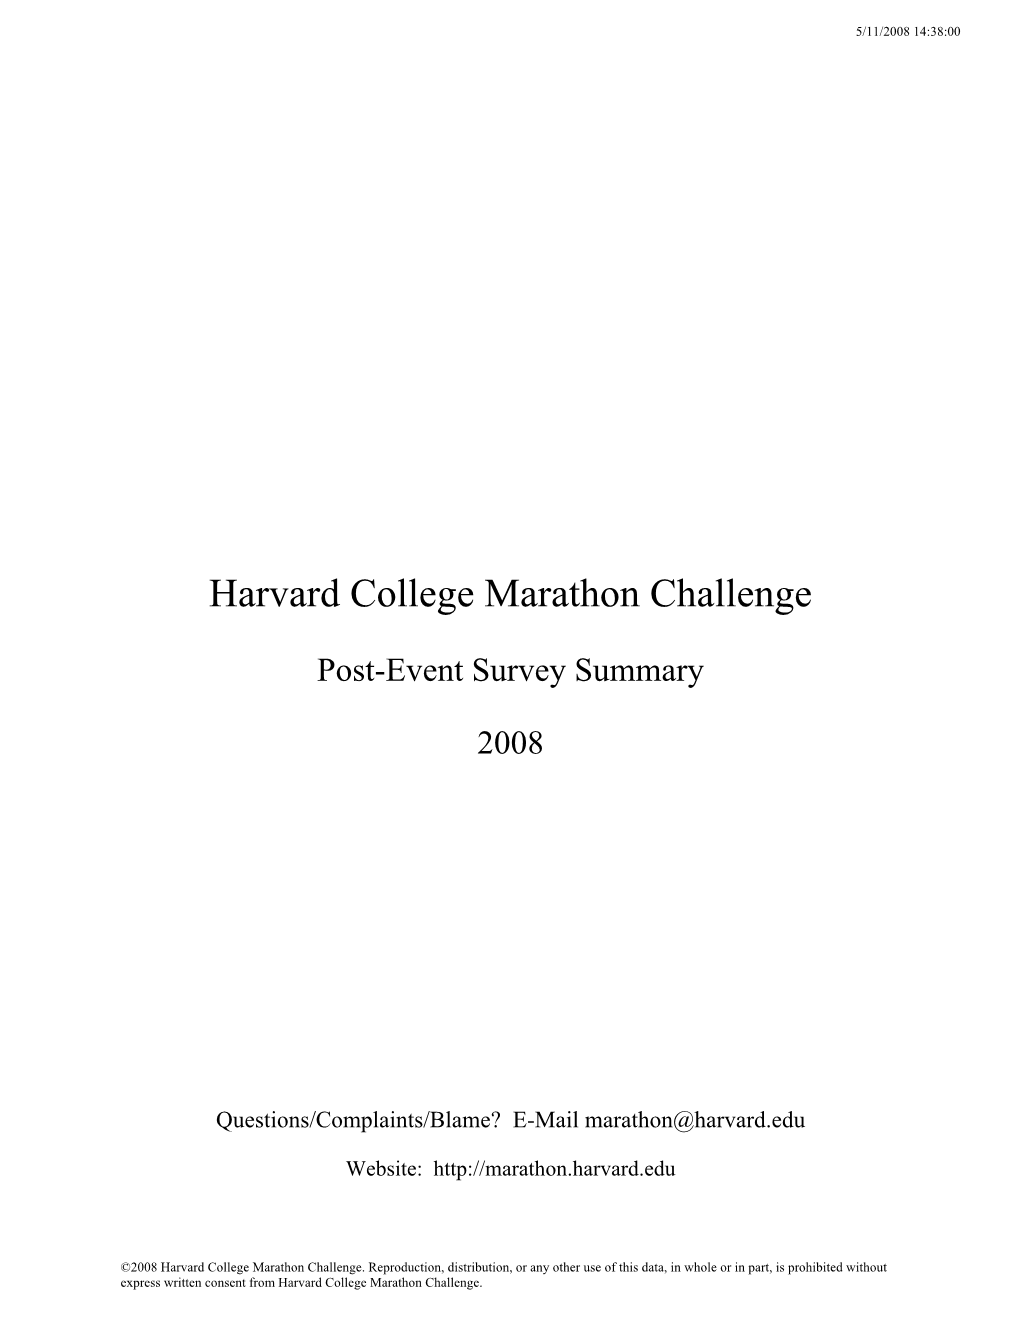 HCMC 2008 Survey Summary